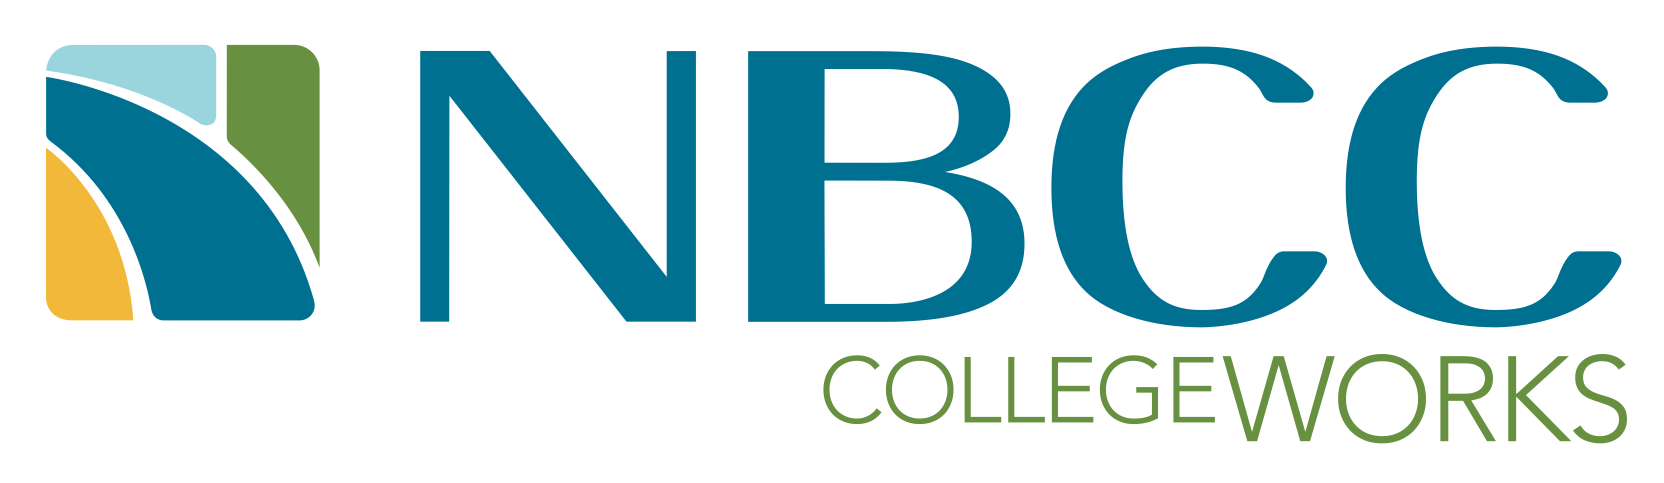 NBCC logo.png